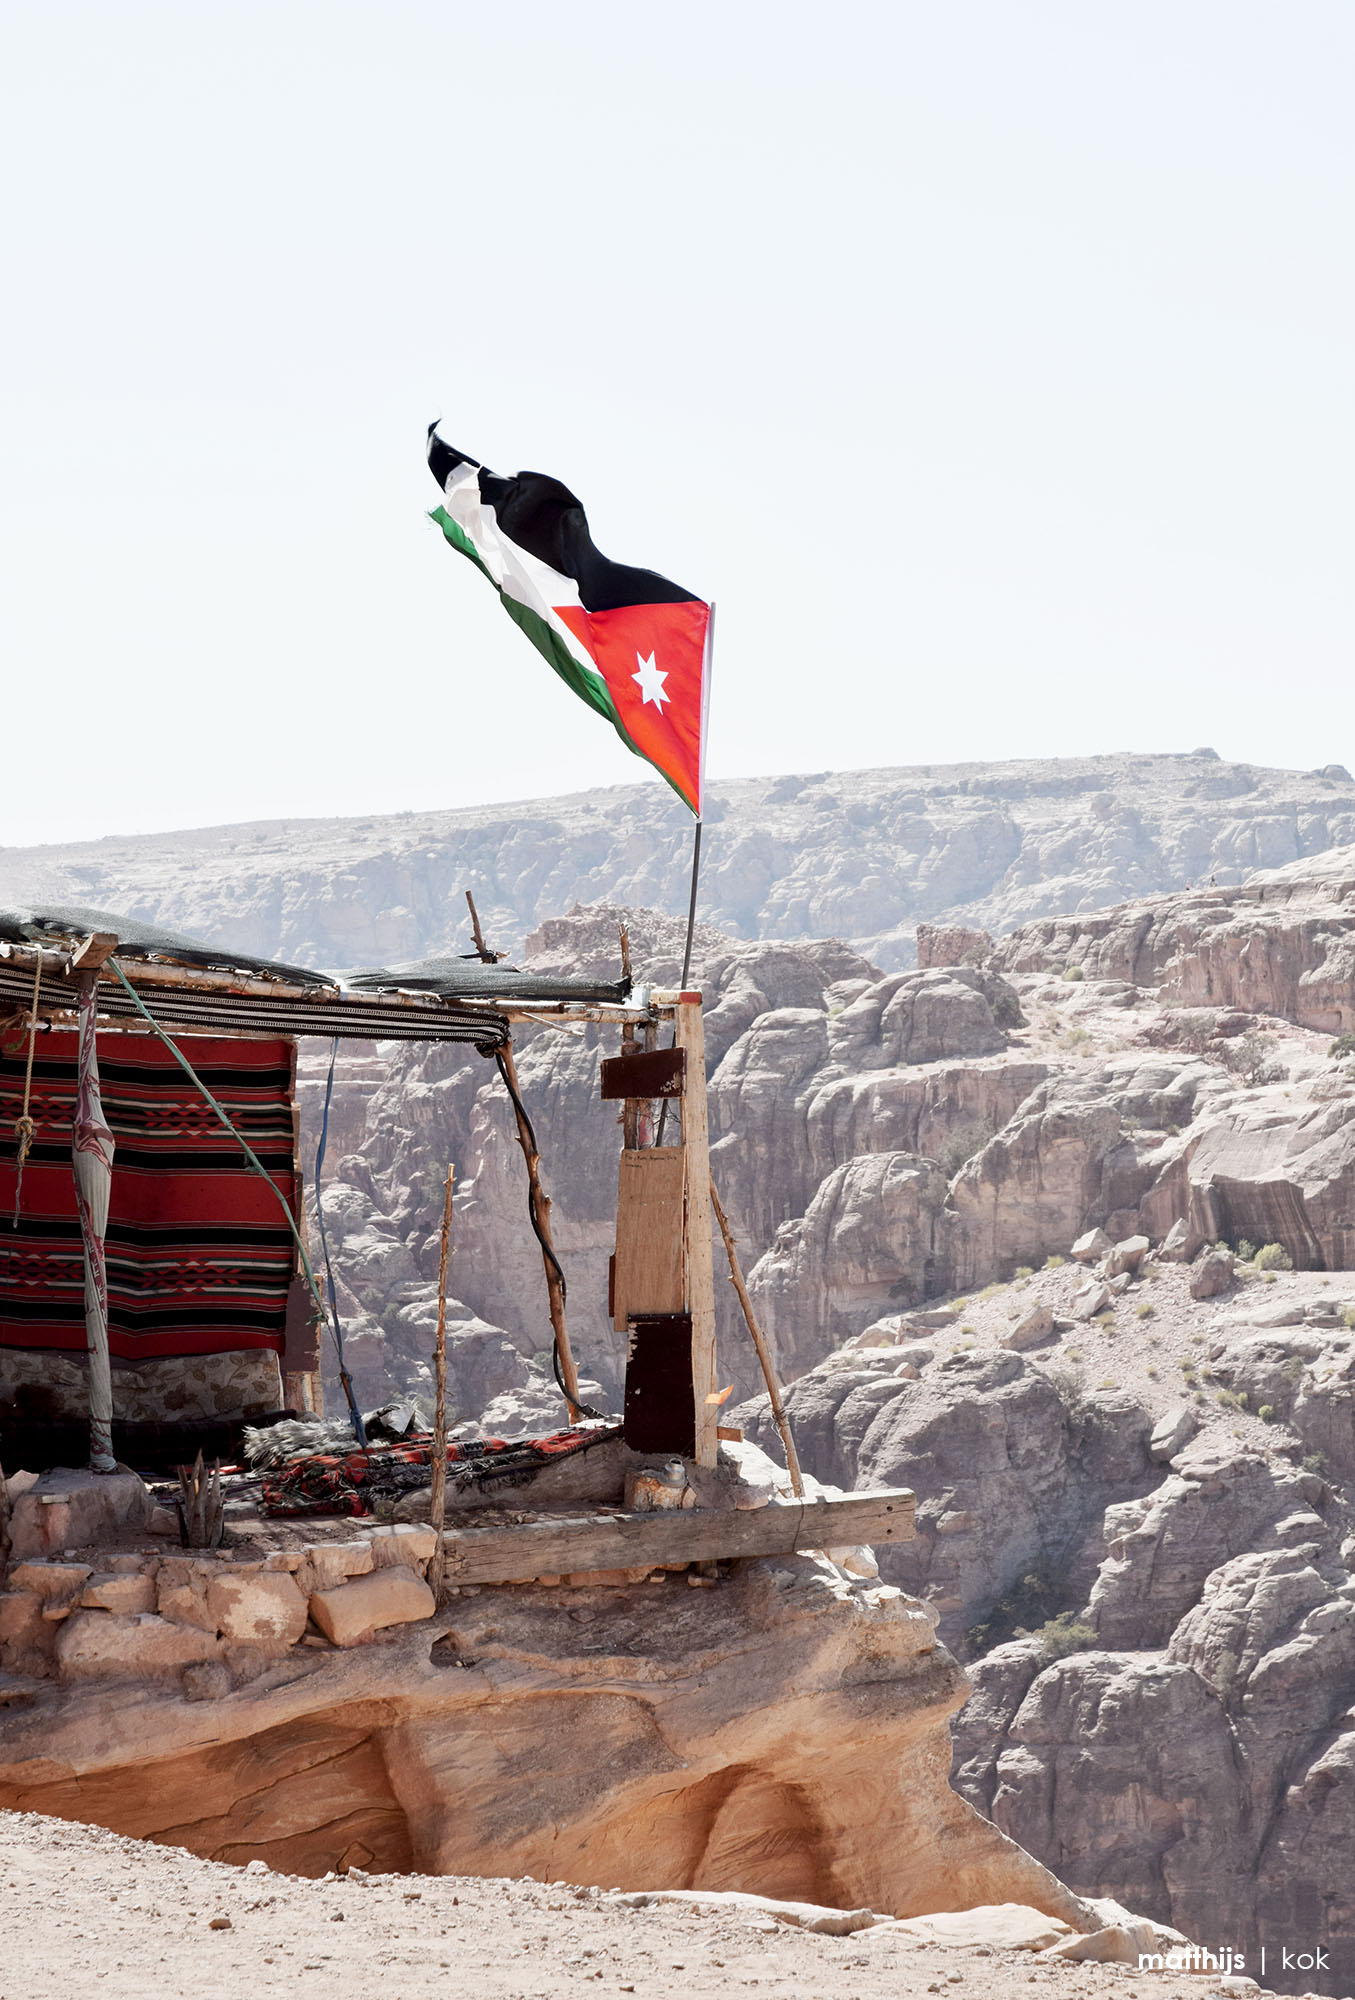 Al-Khubta Trail, Petra, Jordan | Photography by Matthijs Kok